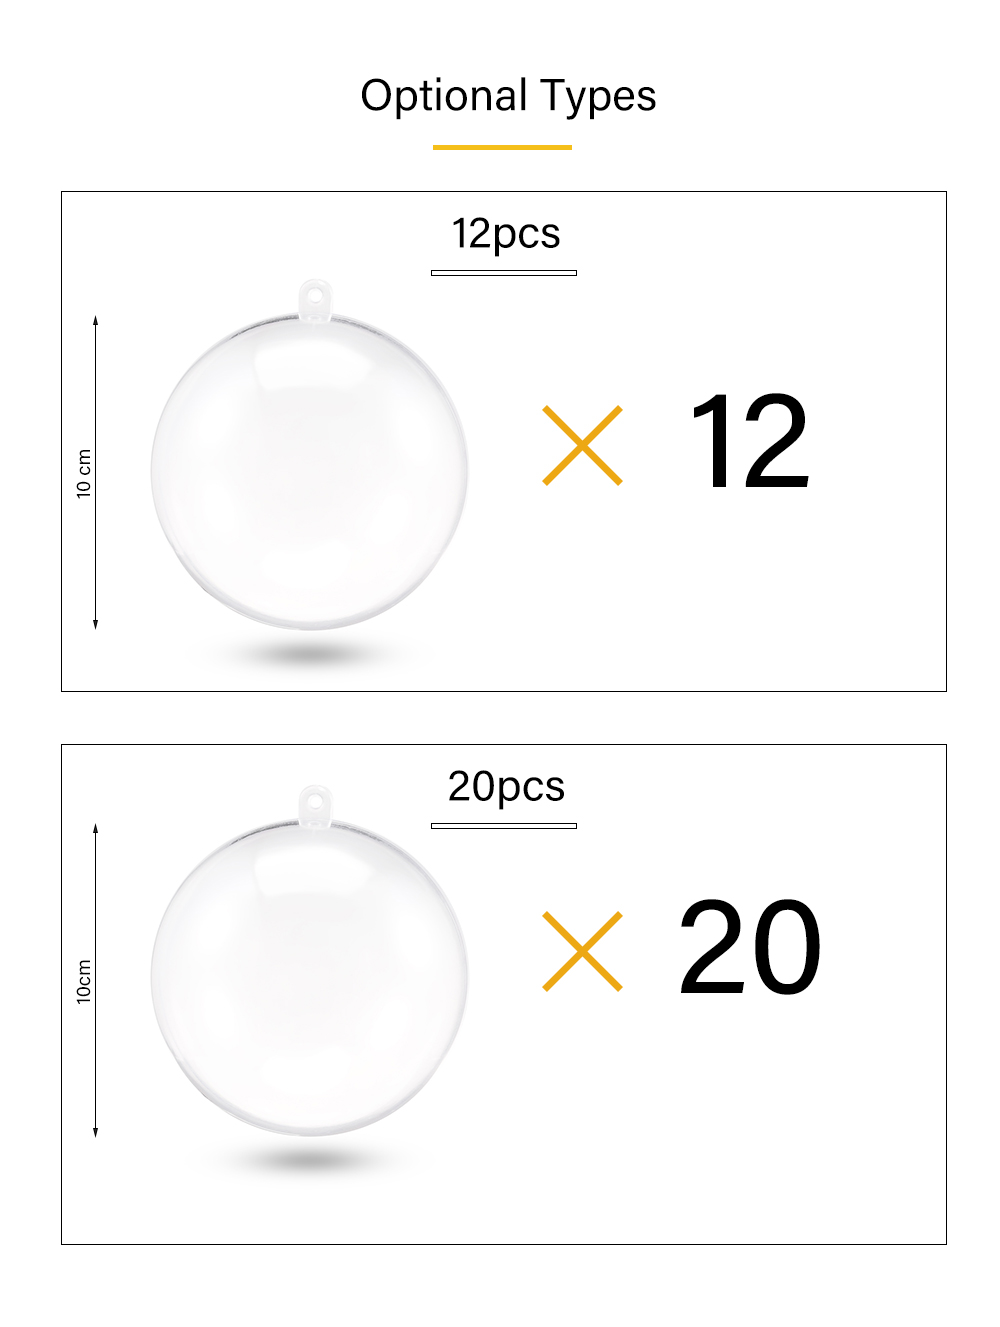 10cm Transparent Plastic Tress Hanging Balls